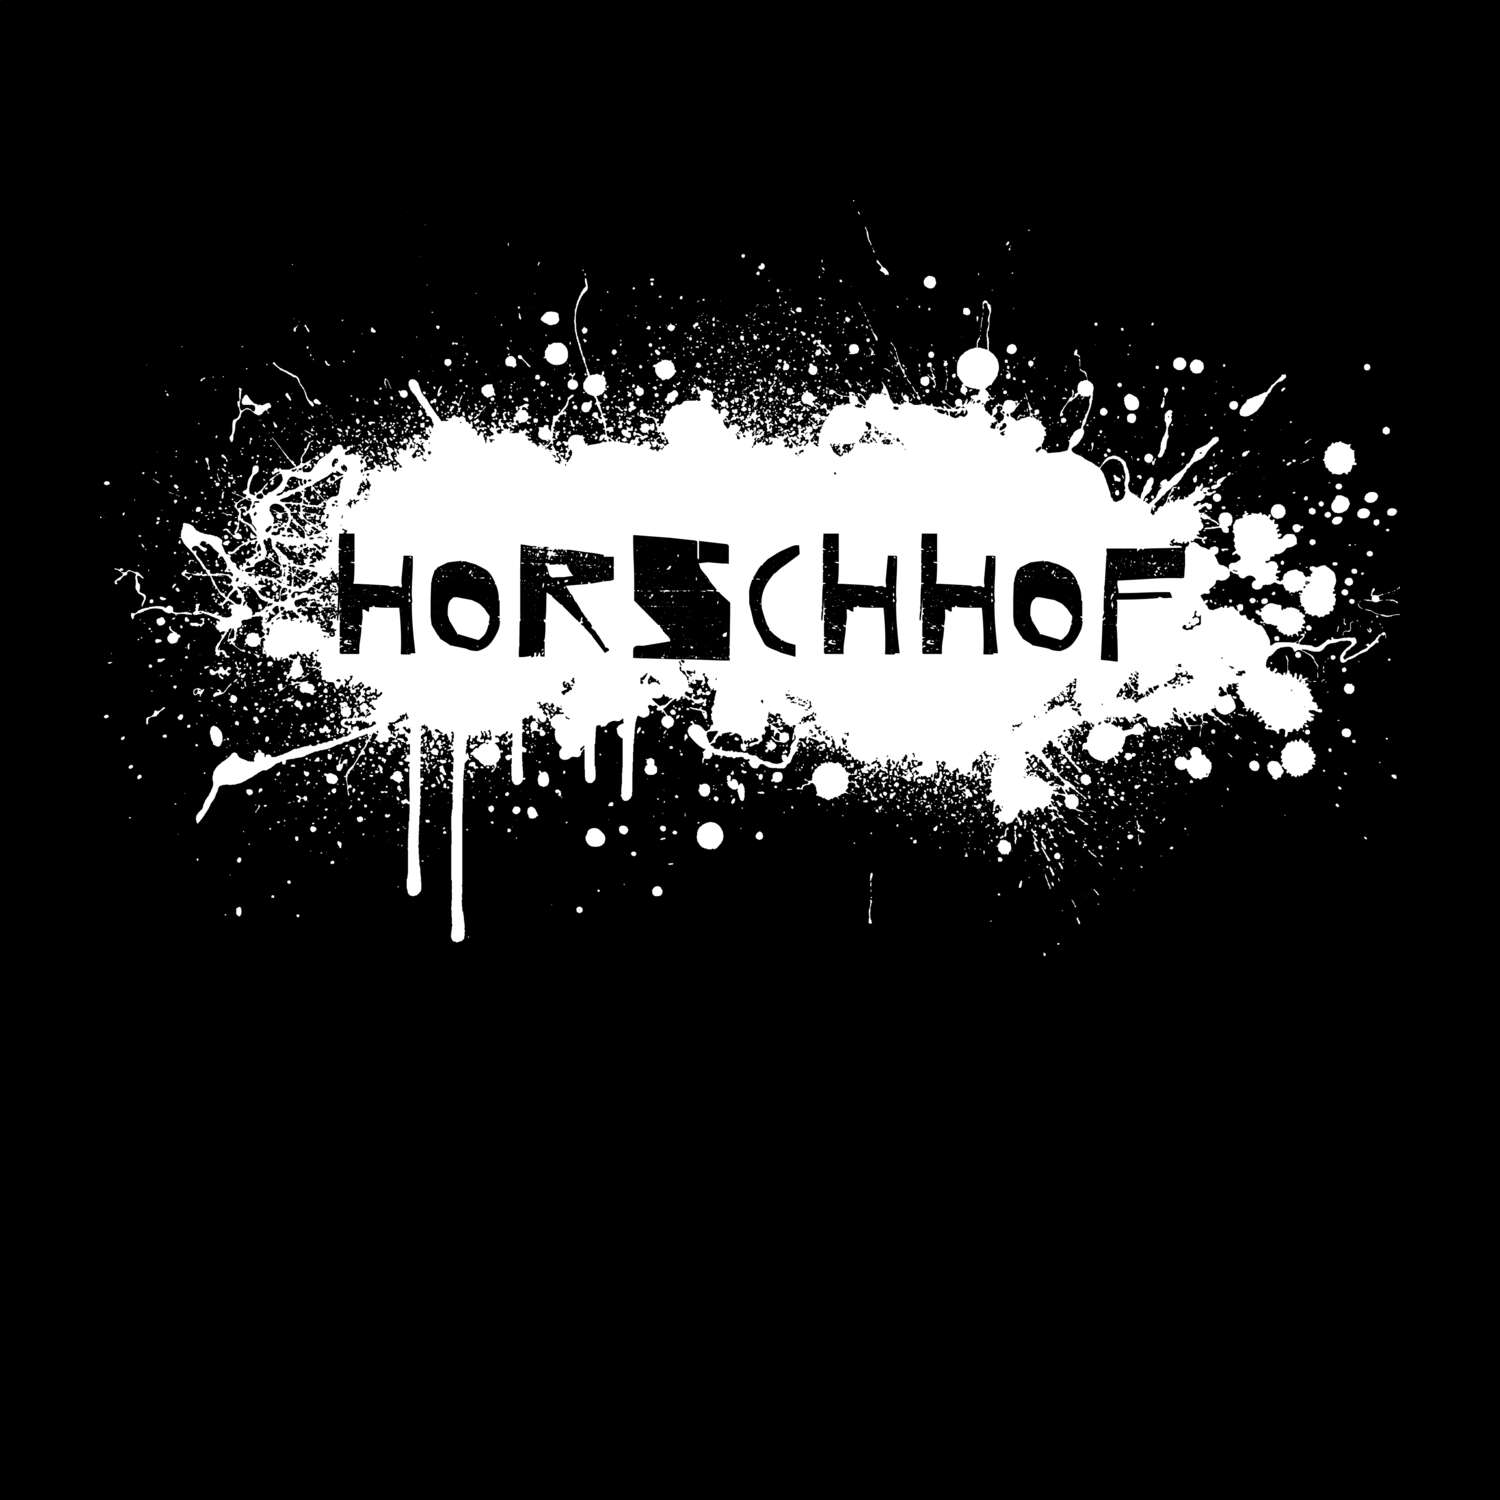 Horschhof T-Shirt »Paint Splash Punk«